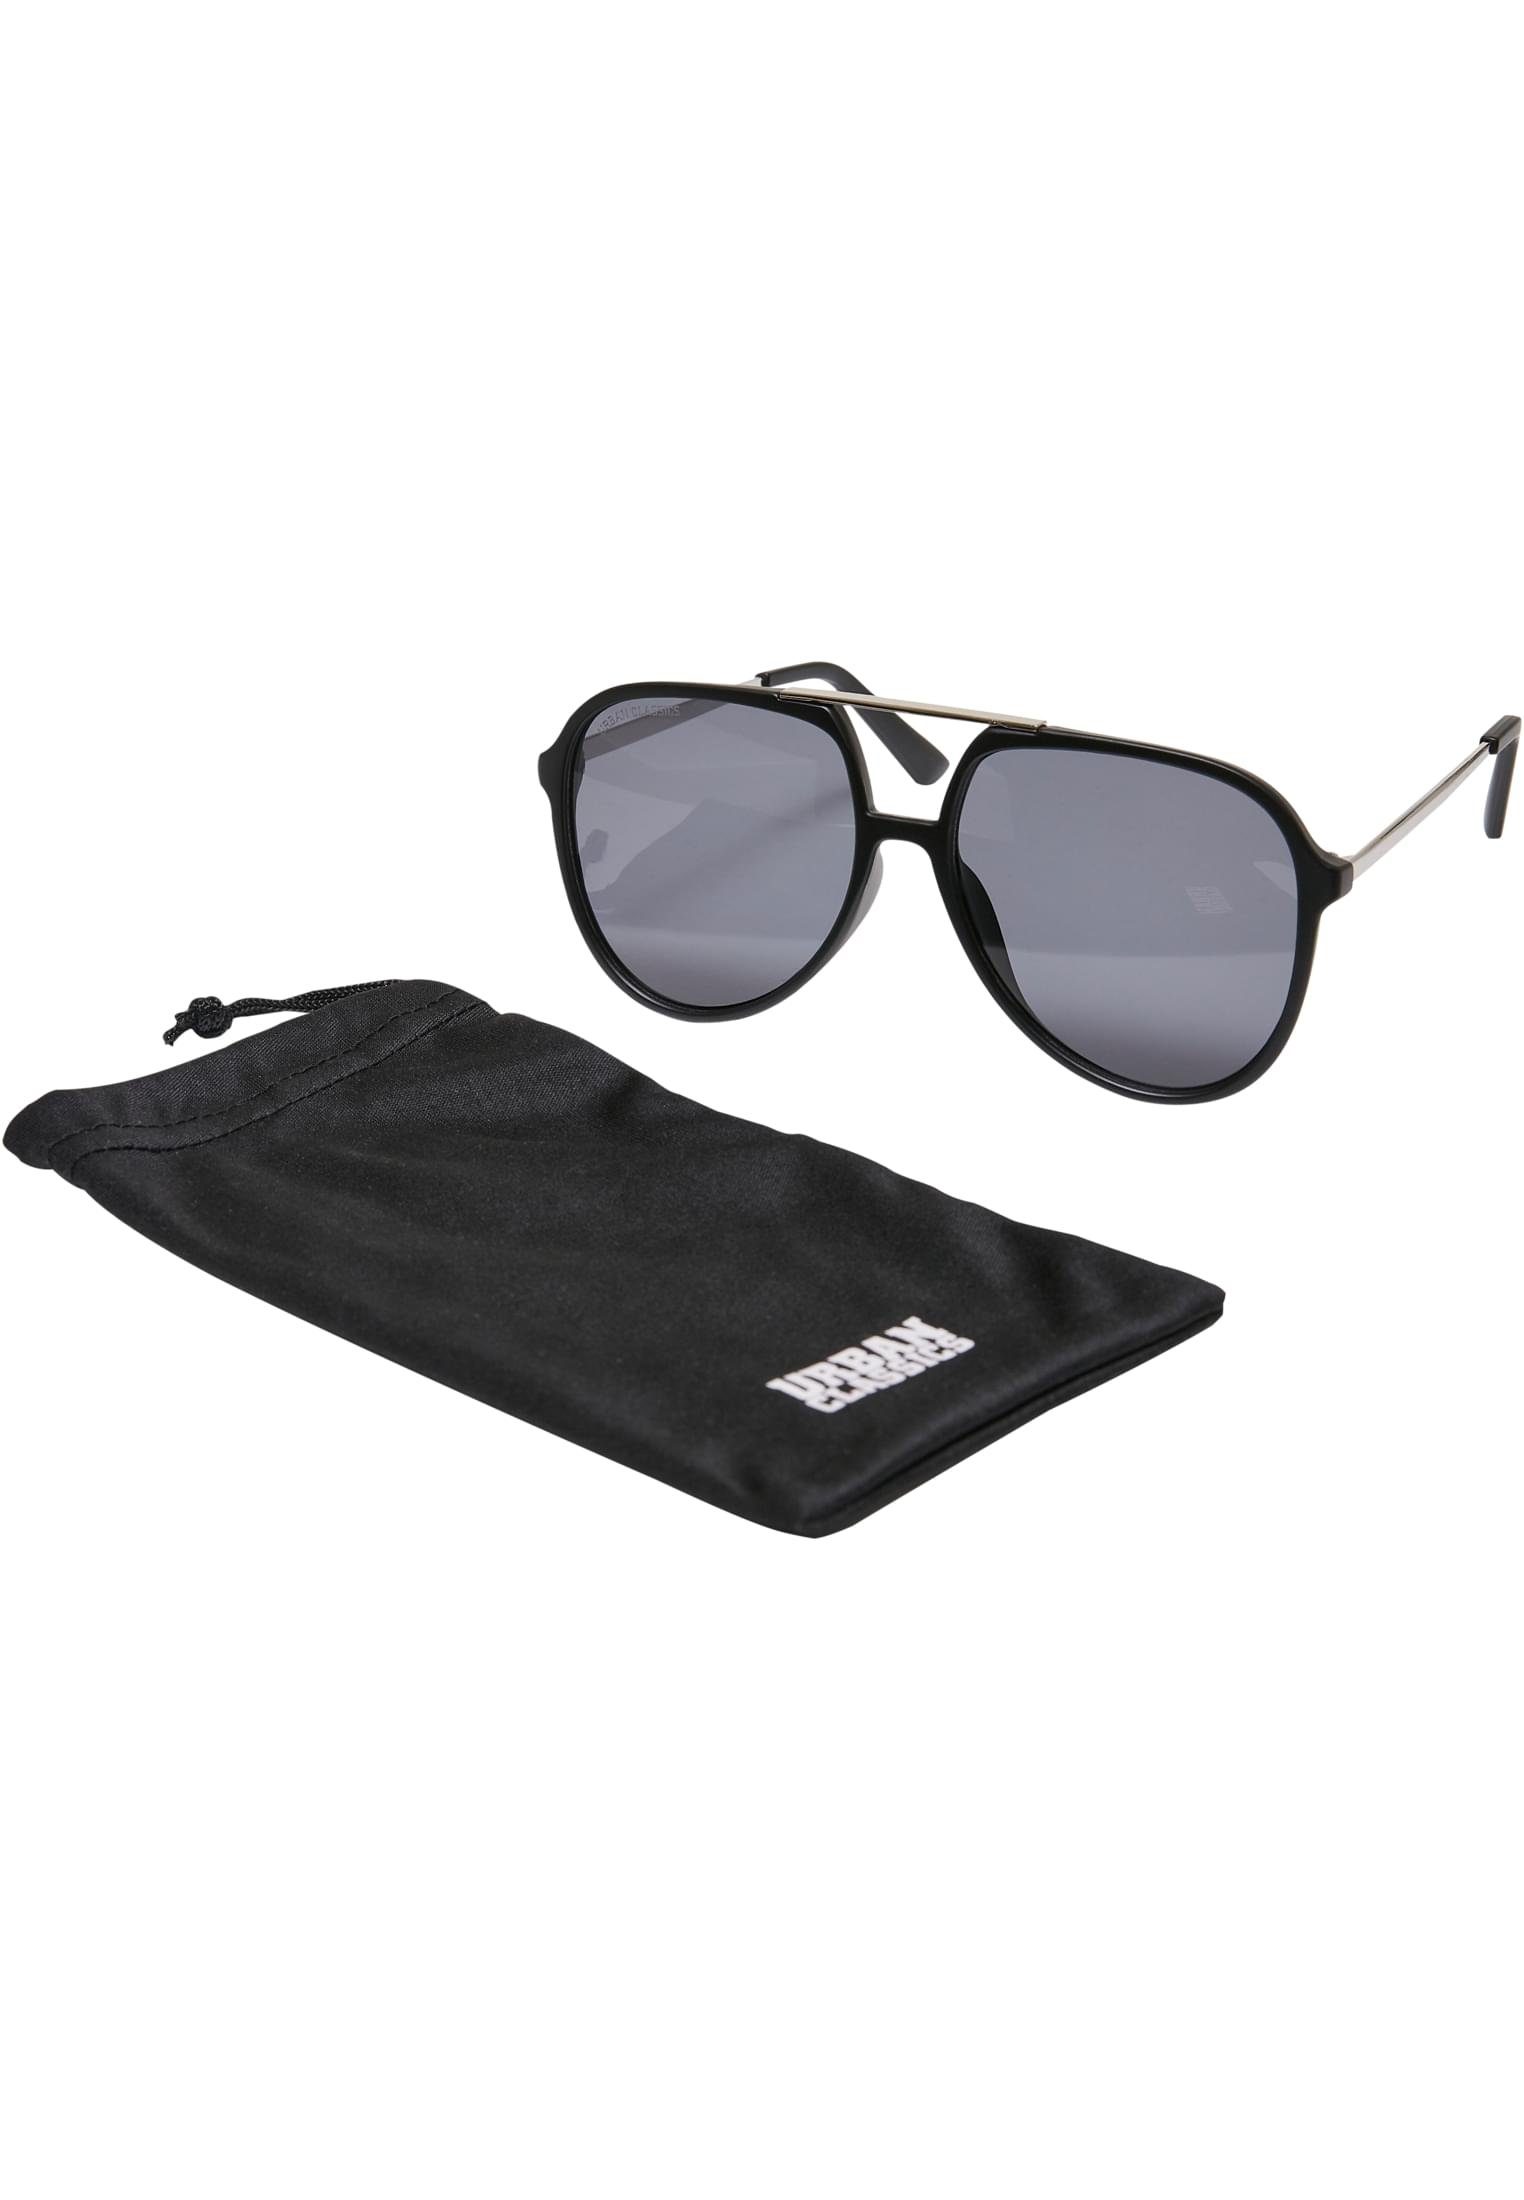 black/silver CLASSICS Sunglasses Unisex Osaka URBAN Sonnenbrille